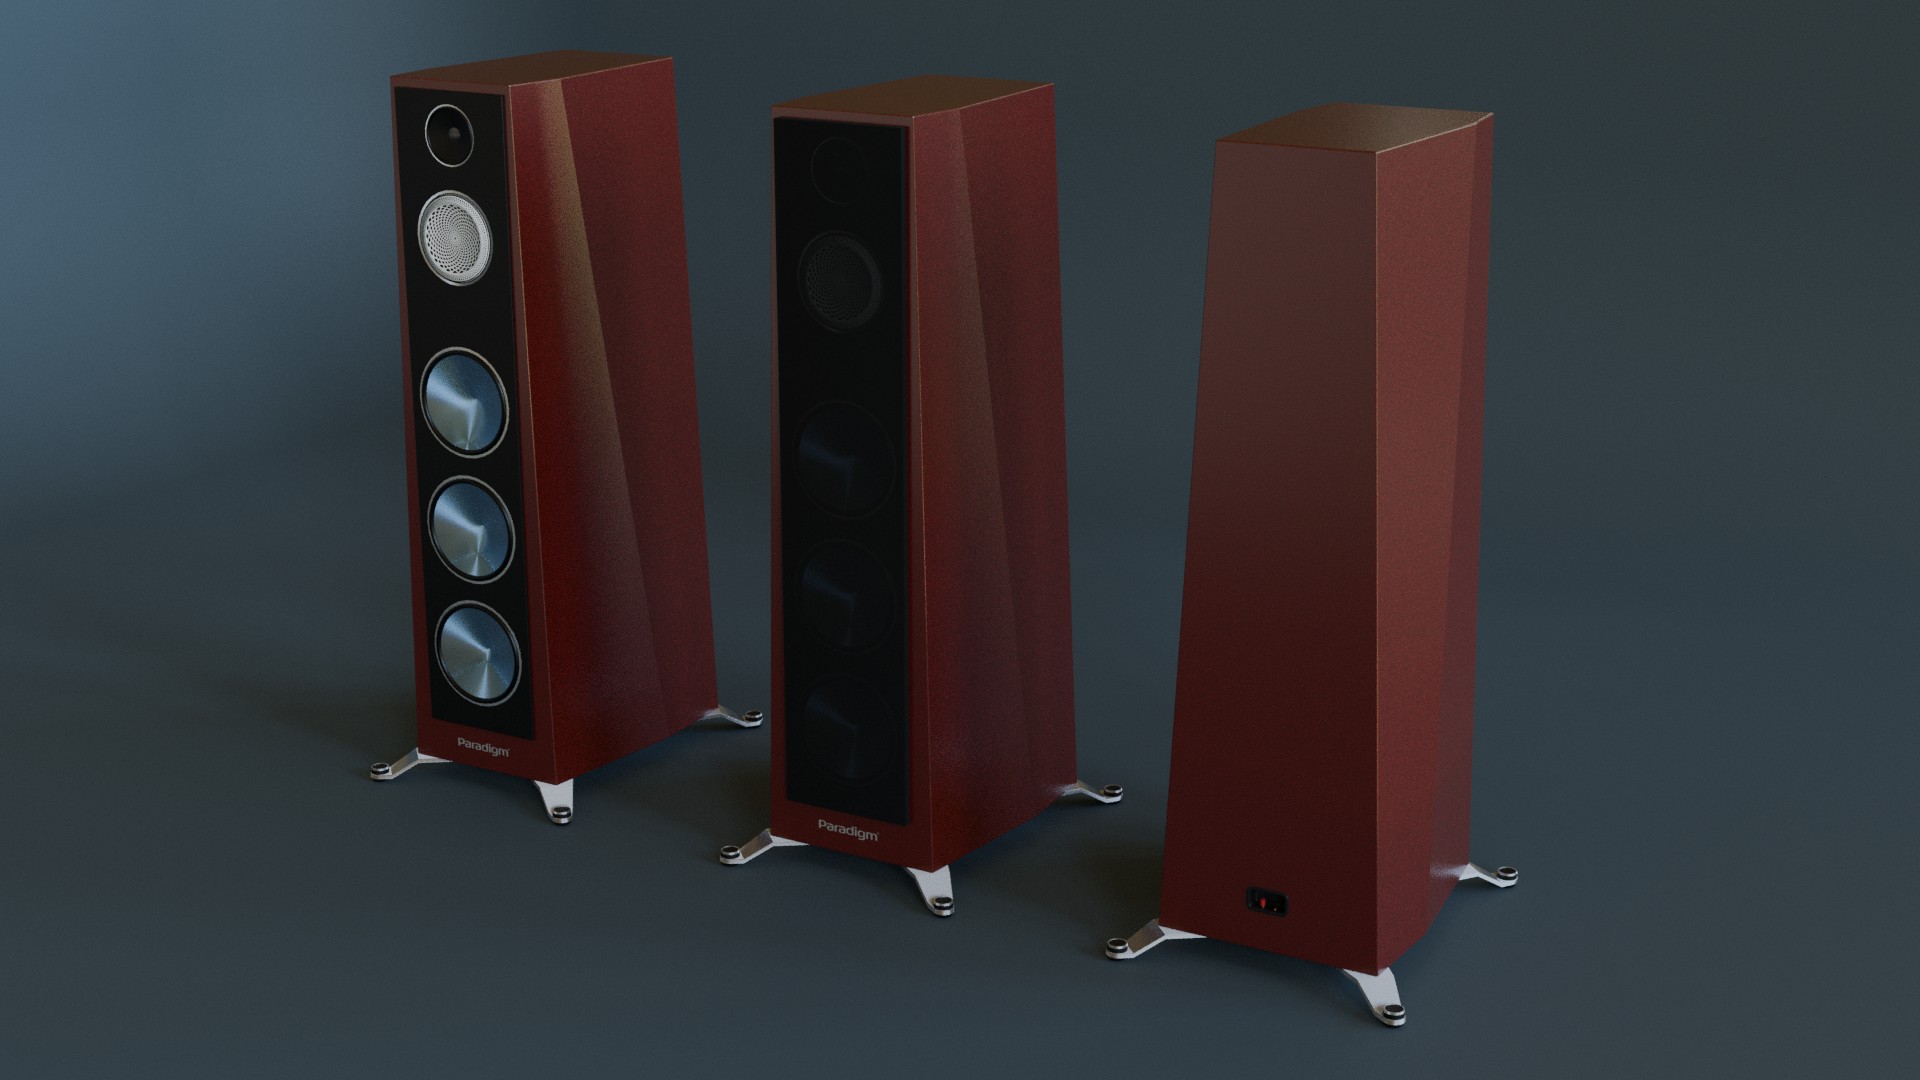 Speaker - Paradigm Founder Series 100F preview image 1